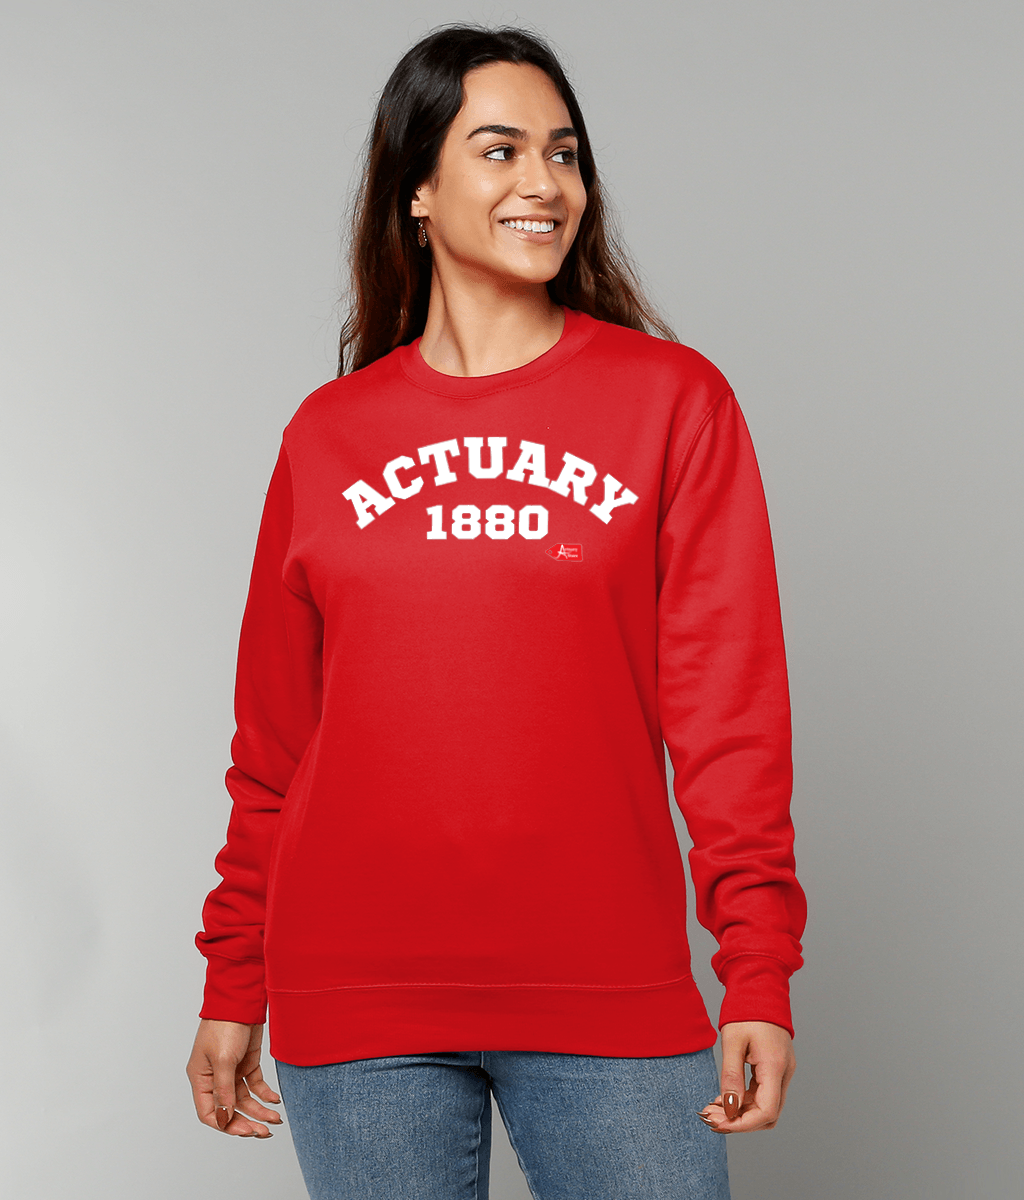 Actuary Varsity Sweatshirt (Black, Red and Green Variants)